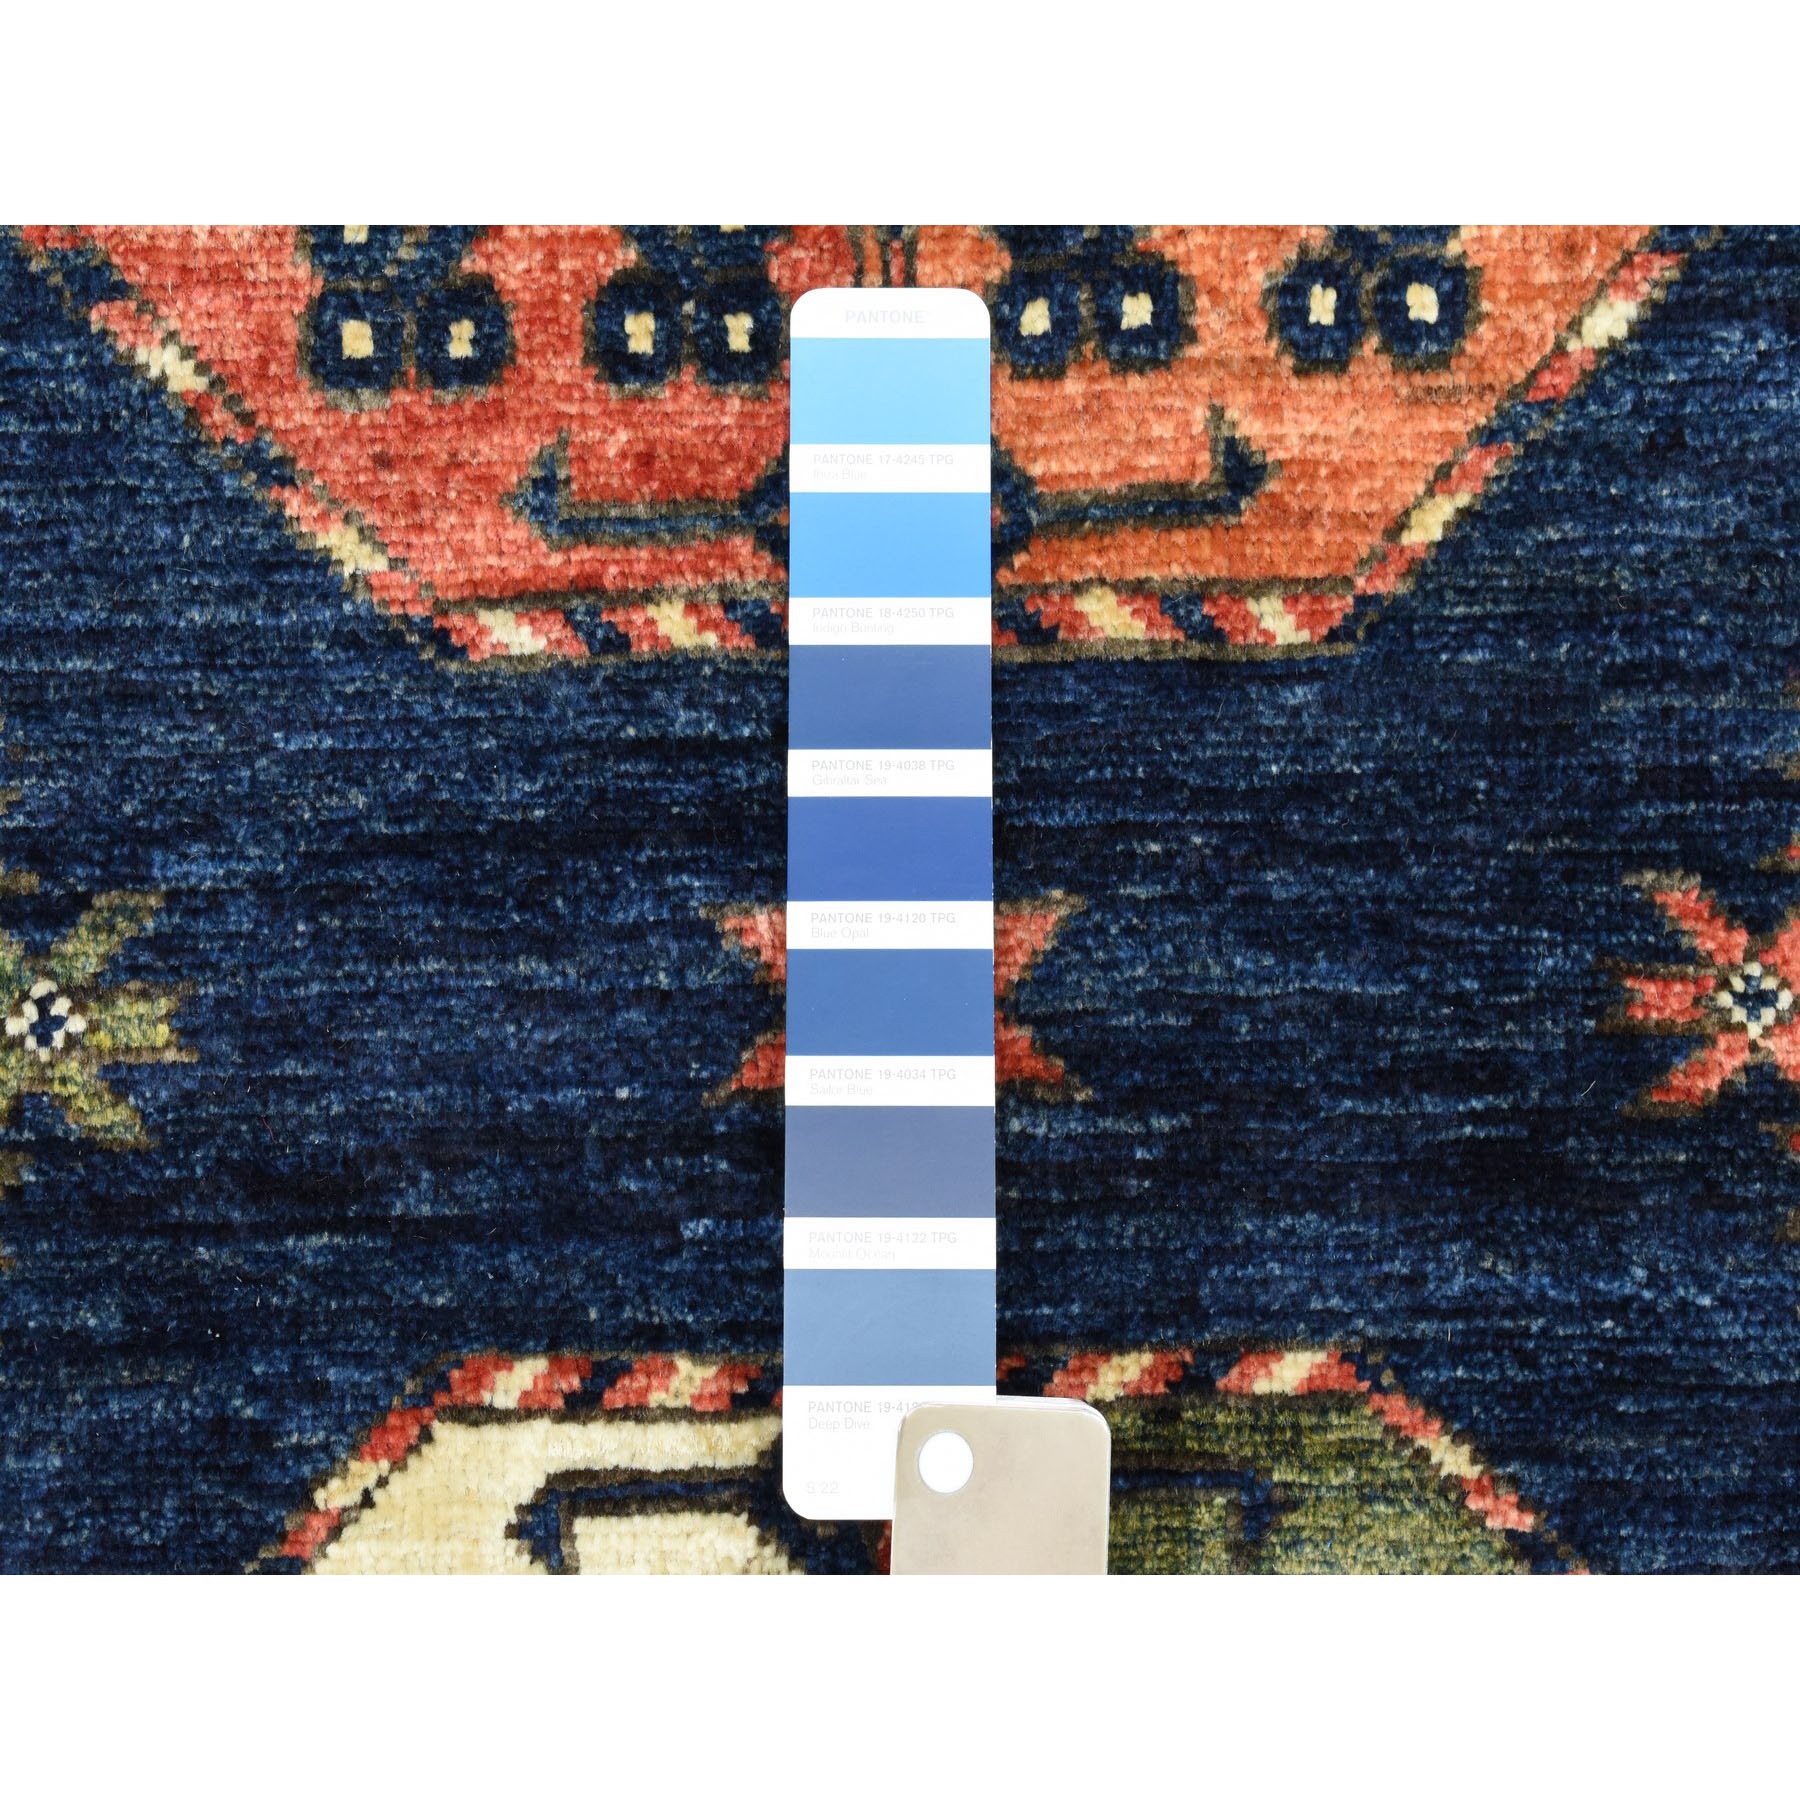 2-8 x9-7  Blue Afghan Ersari Elephant Feet Design Pure Wool Hand Knotted Oriental Rug 